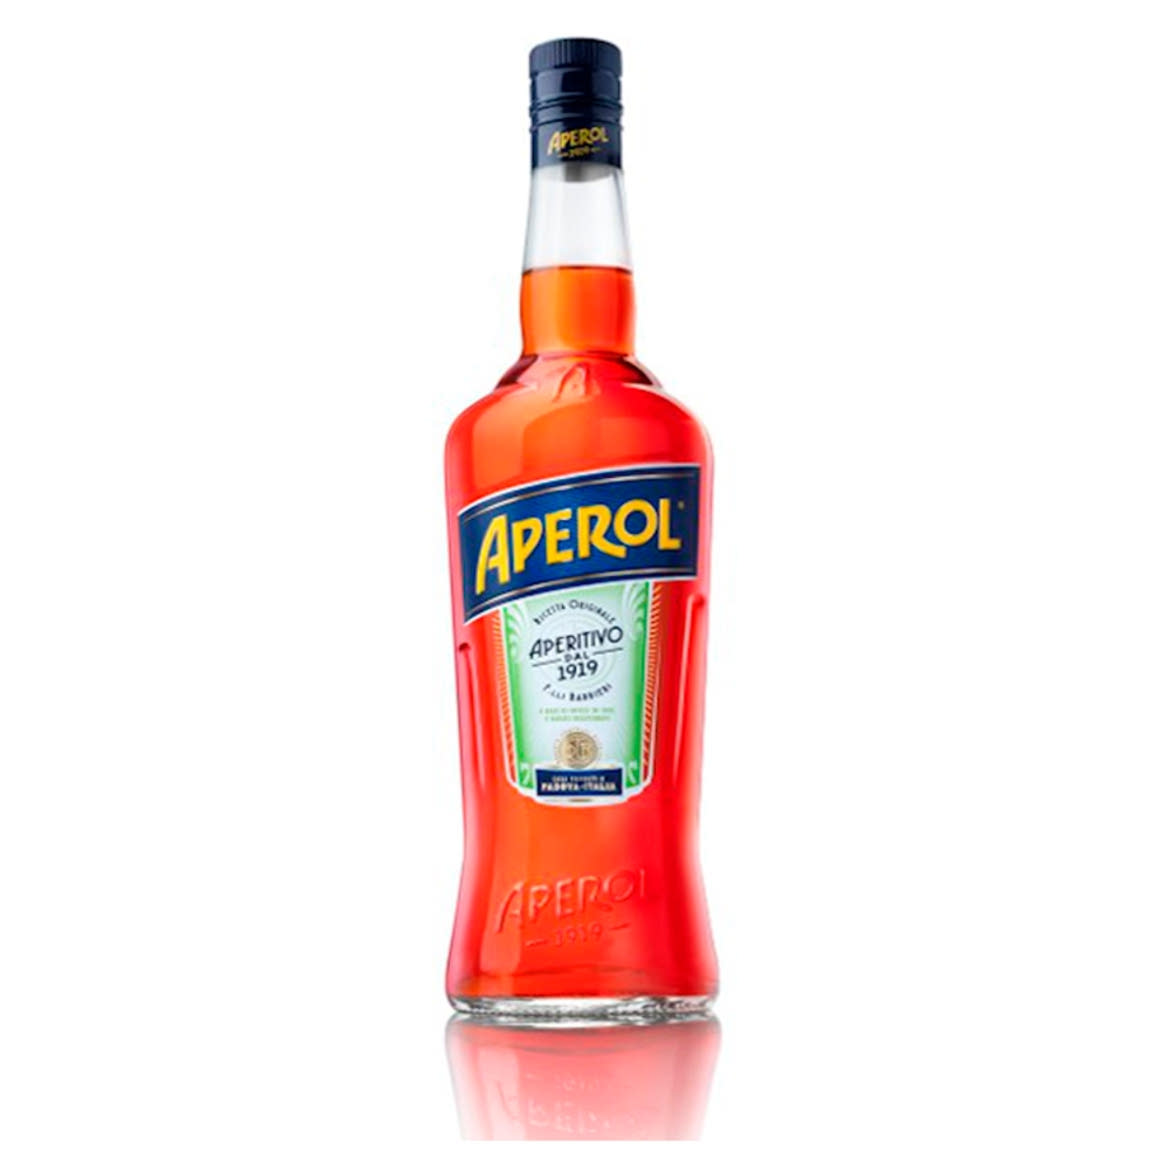 Aperol aperitif ital 11%